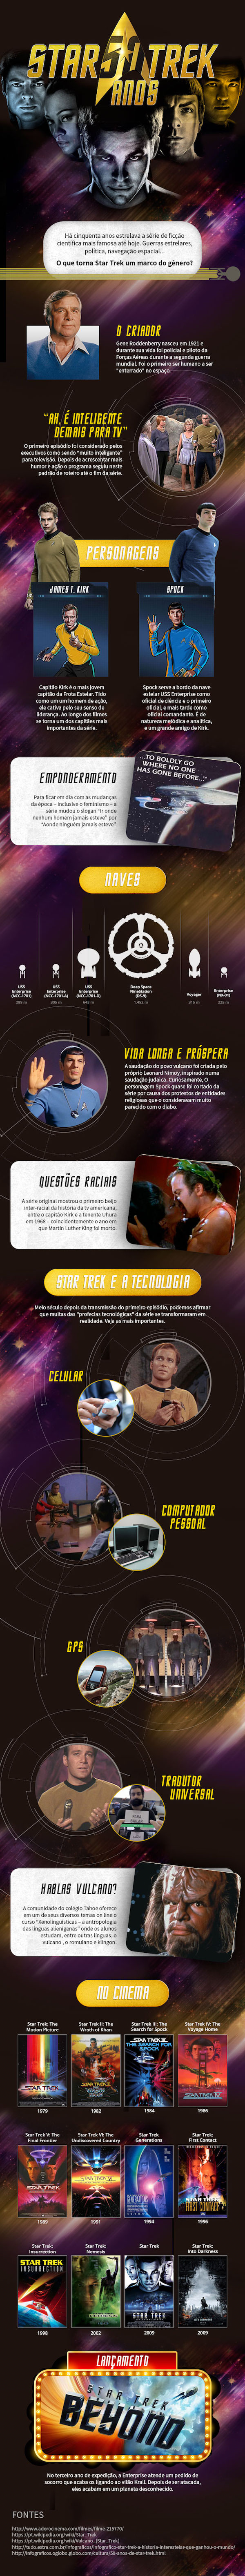 50 anos Star Trek - curiosidades